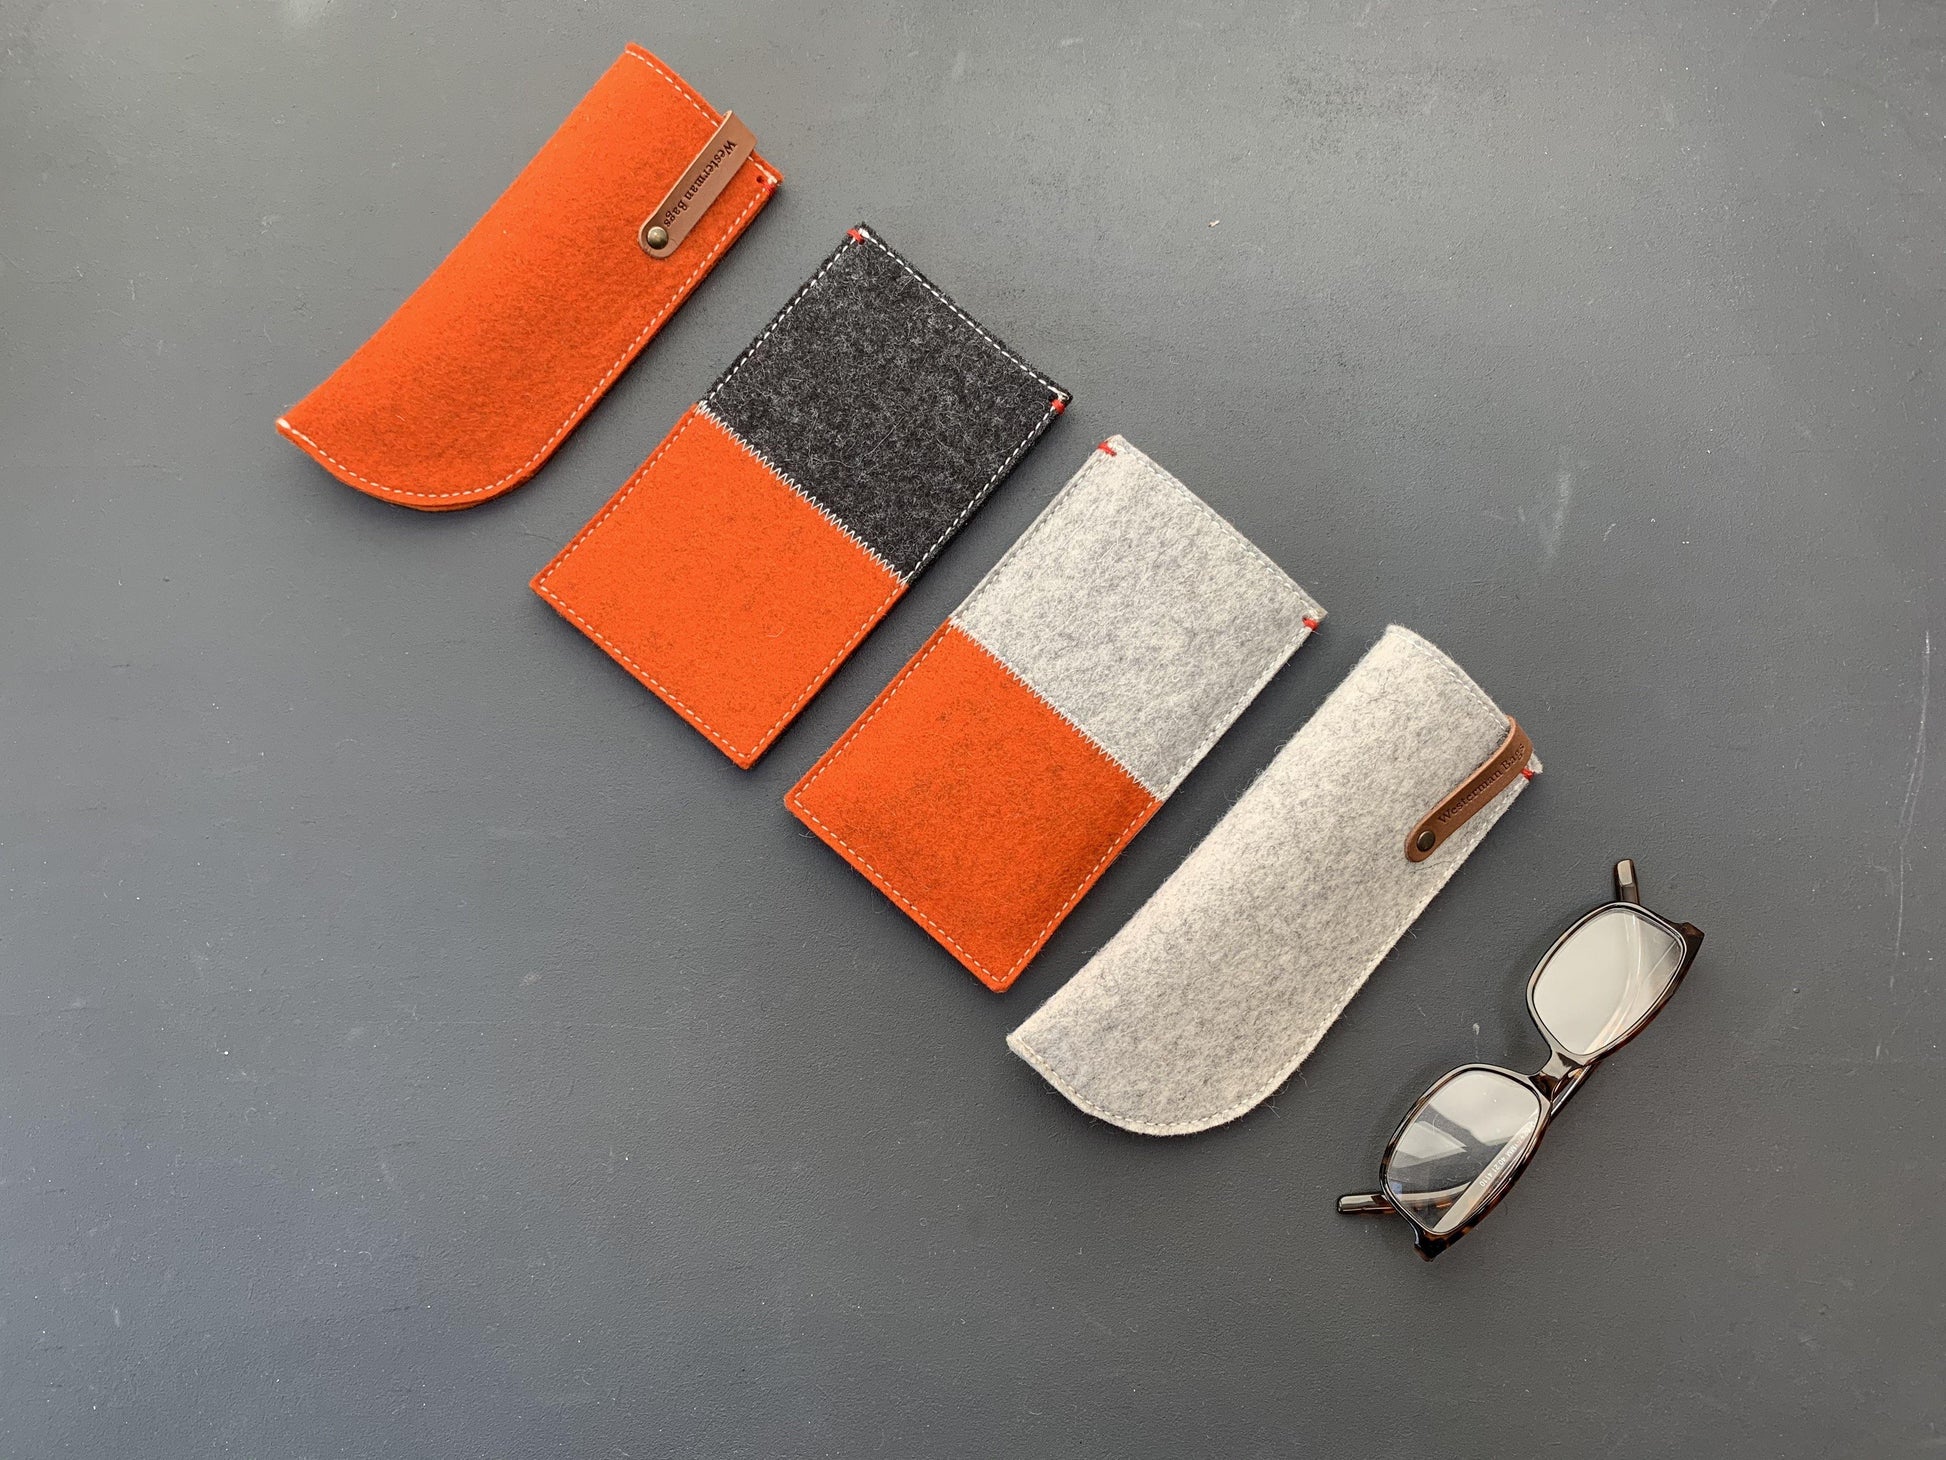 Brillenkoker - eye glasses case - Westerman Bags vilten tassen en hoezen. Dutch Design.